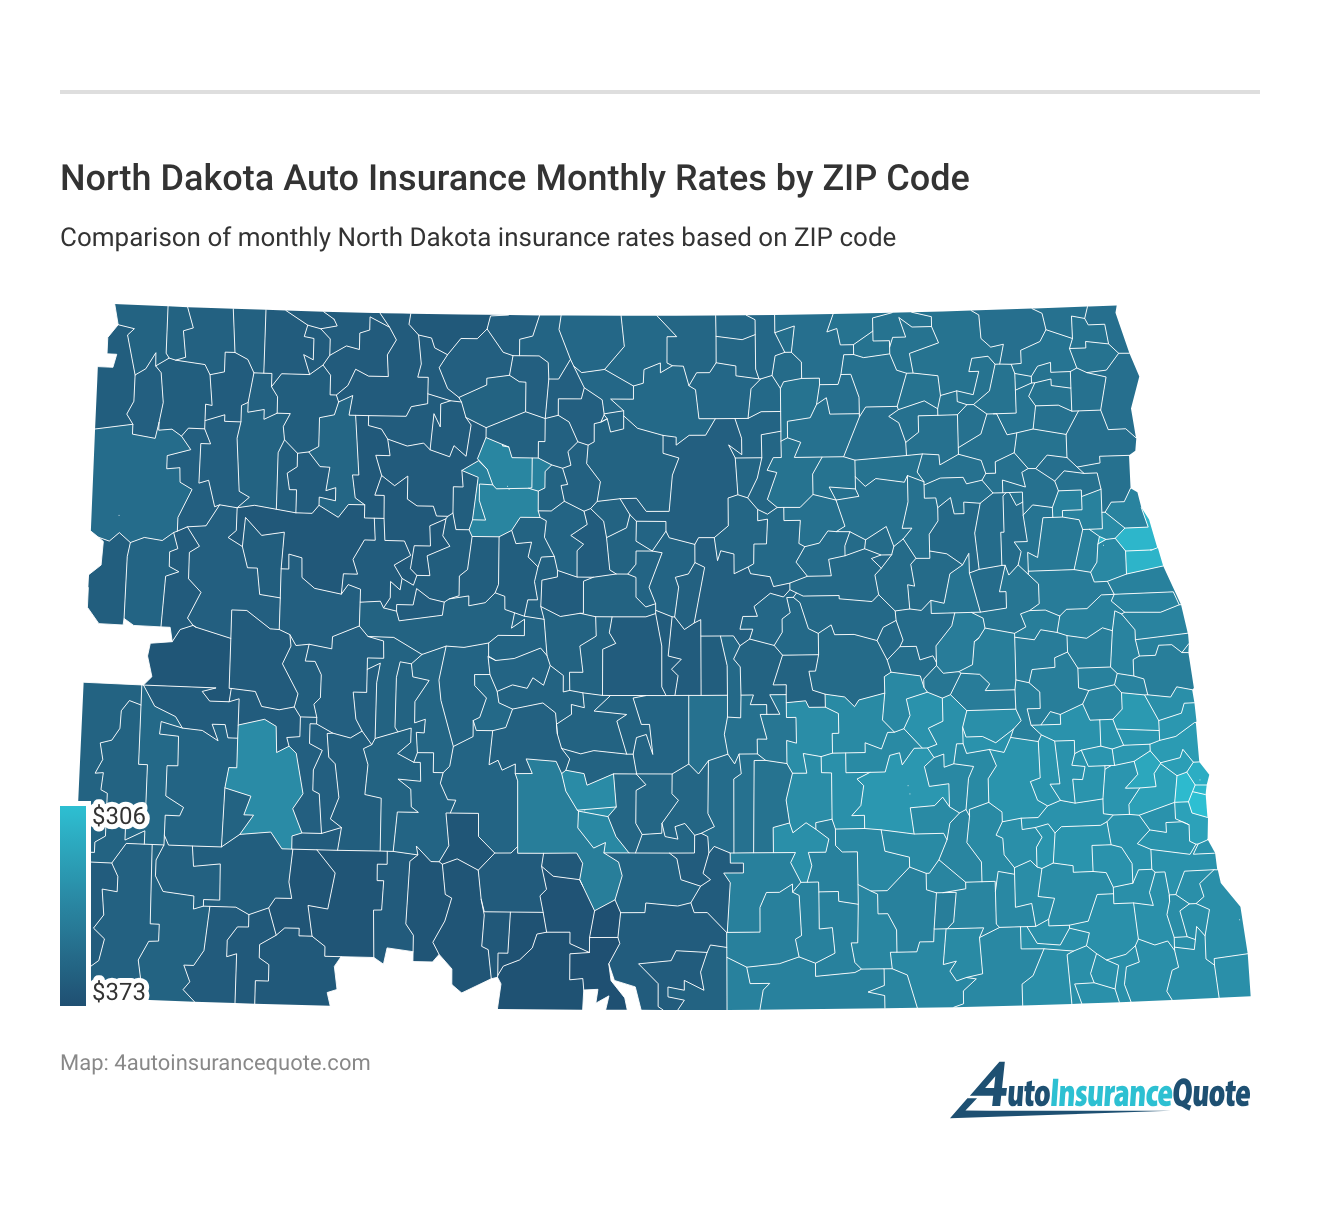 <h3>North Dakota Auto Insurance Monthly Rates by ZIP Code</h3>